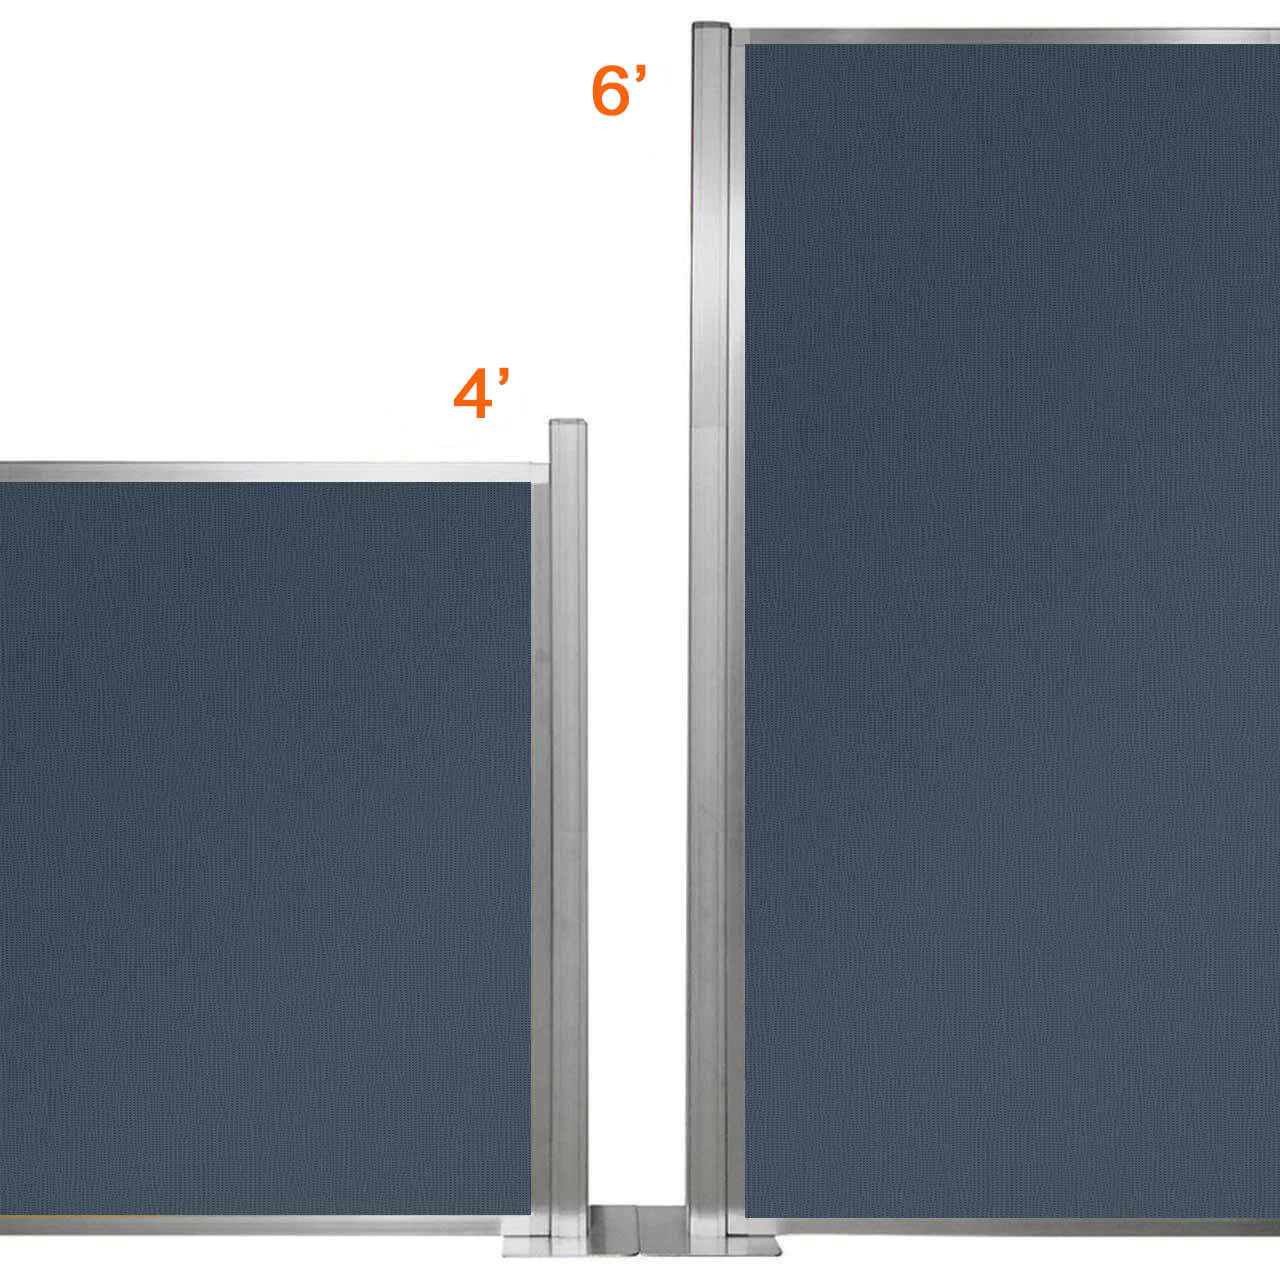 Modular panels post heights 1